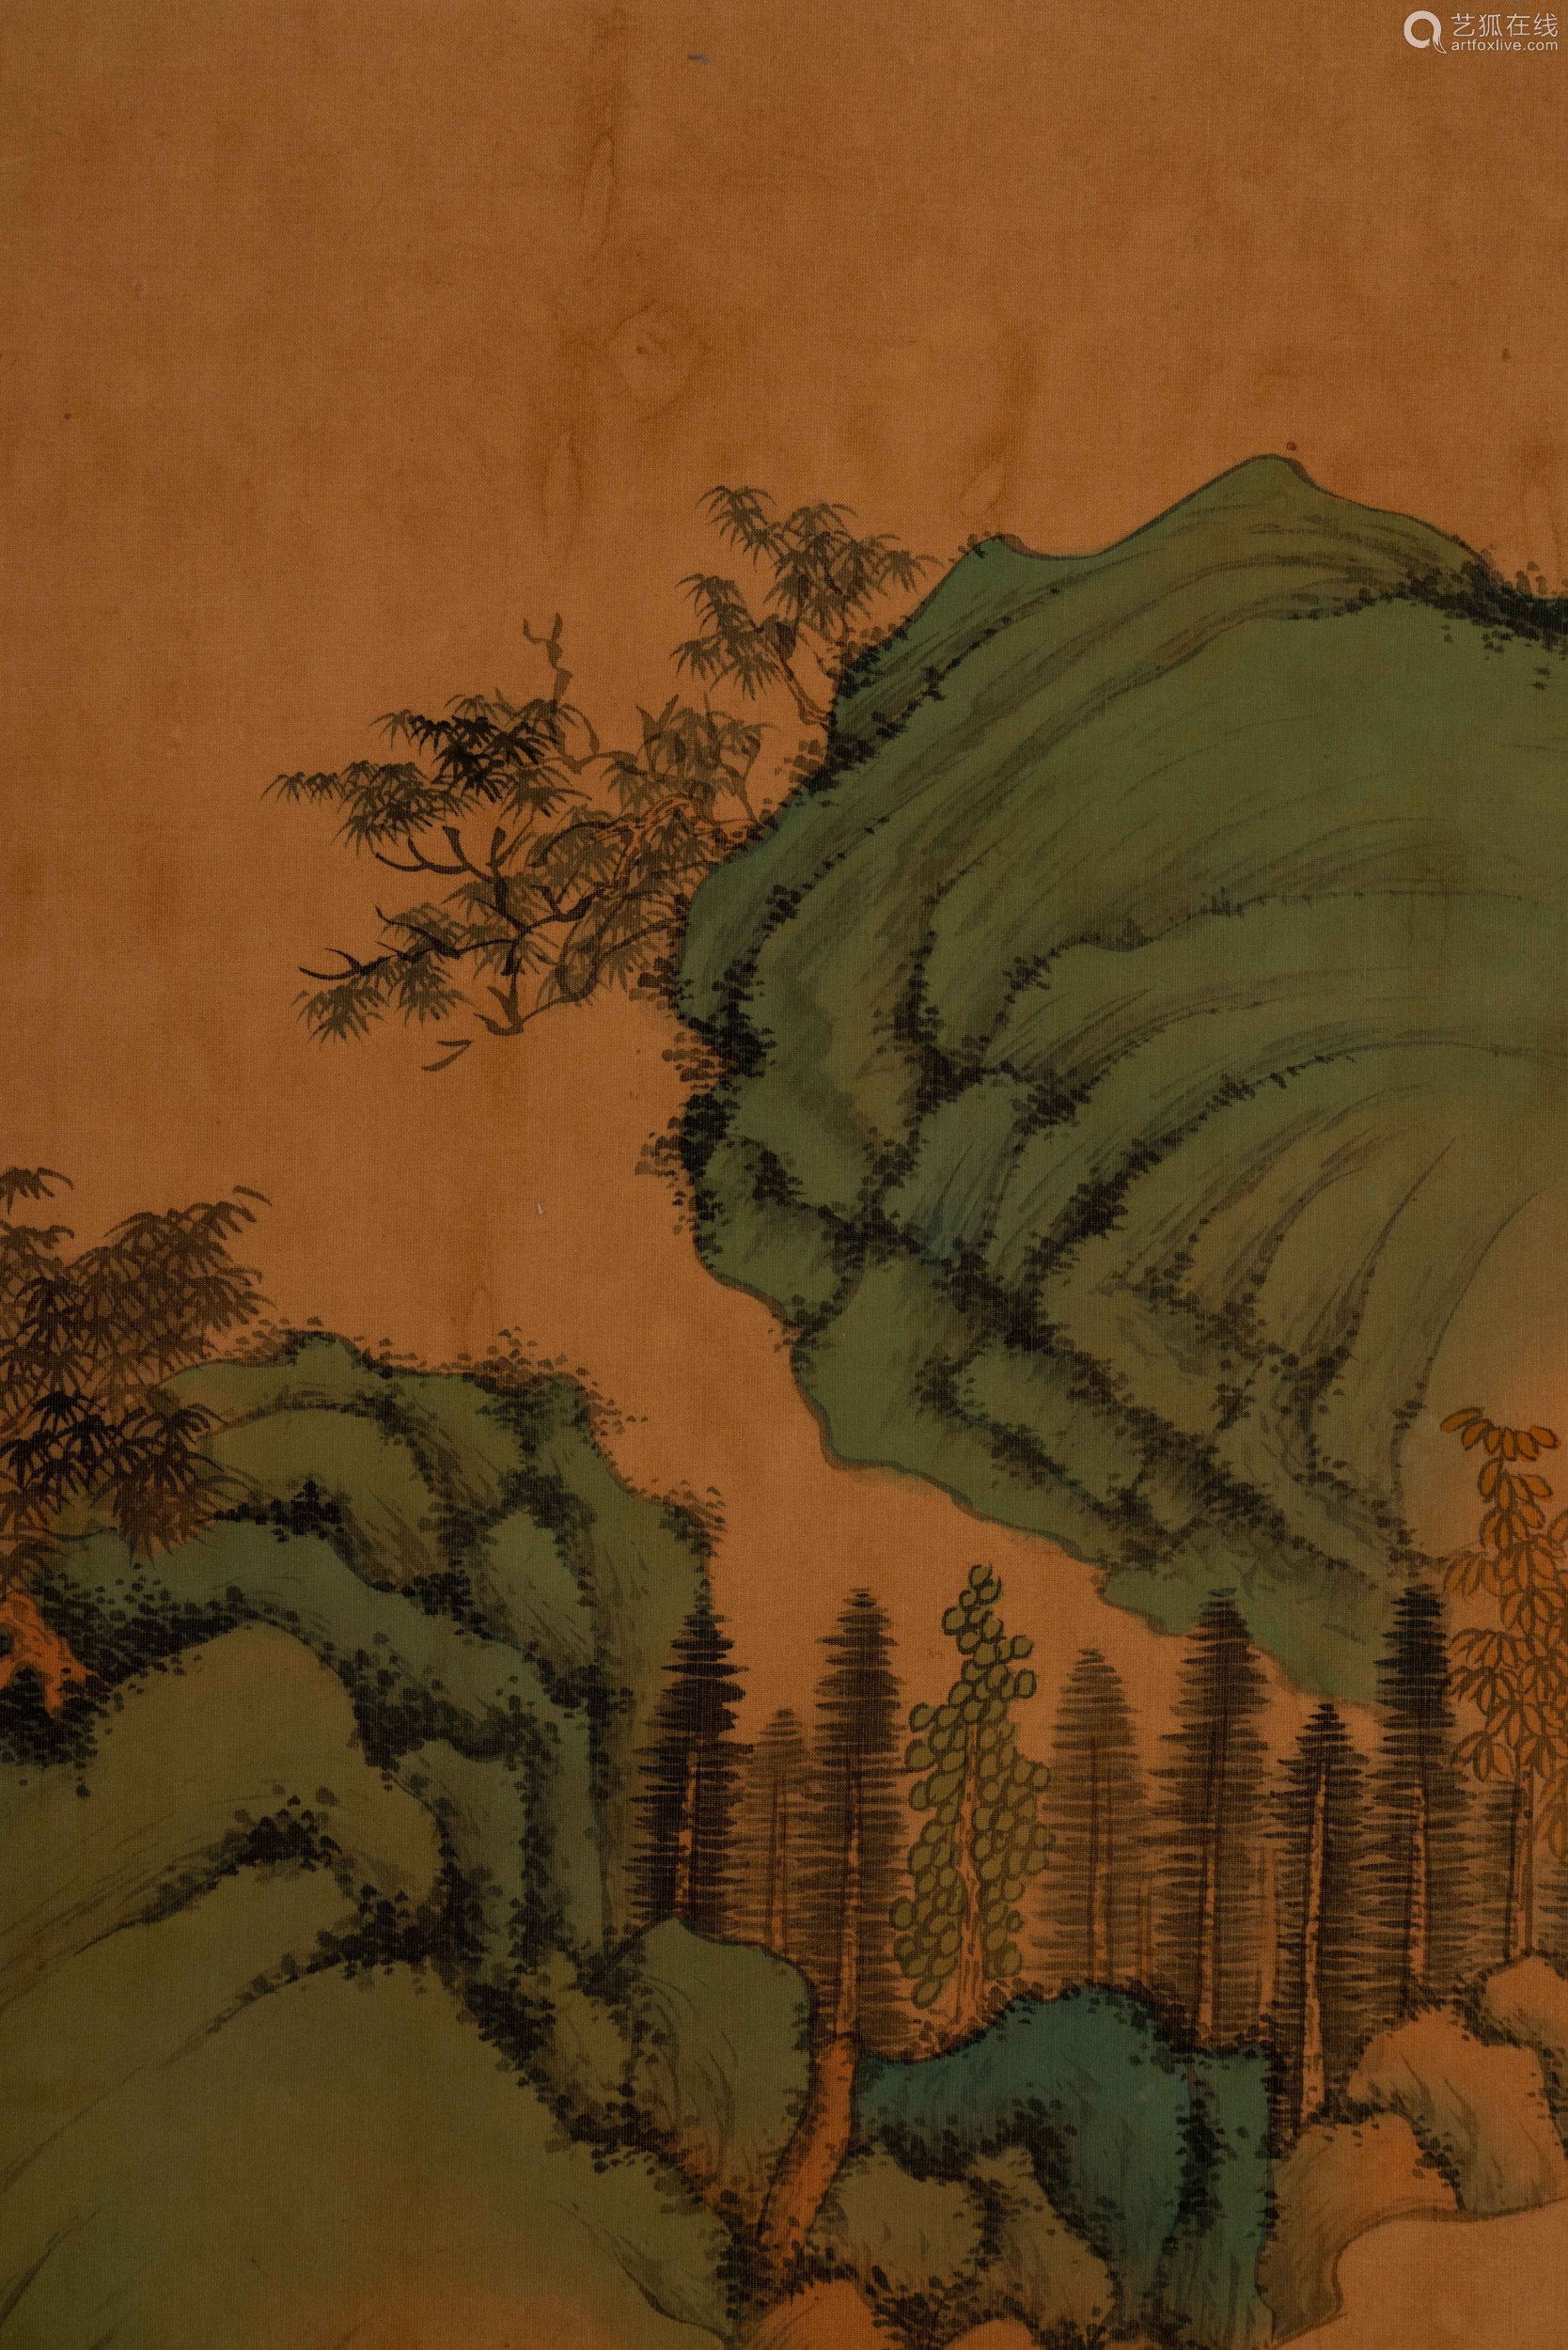 Wen Zhengming's Landscape Vertical Axis